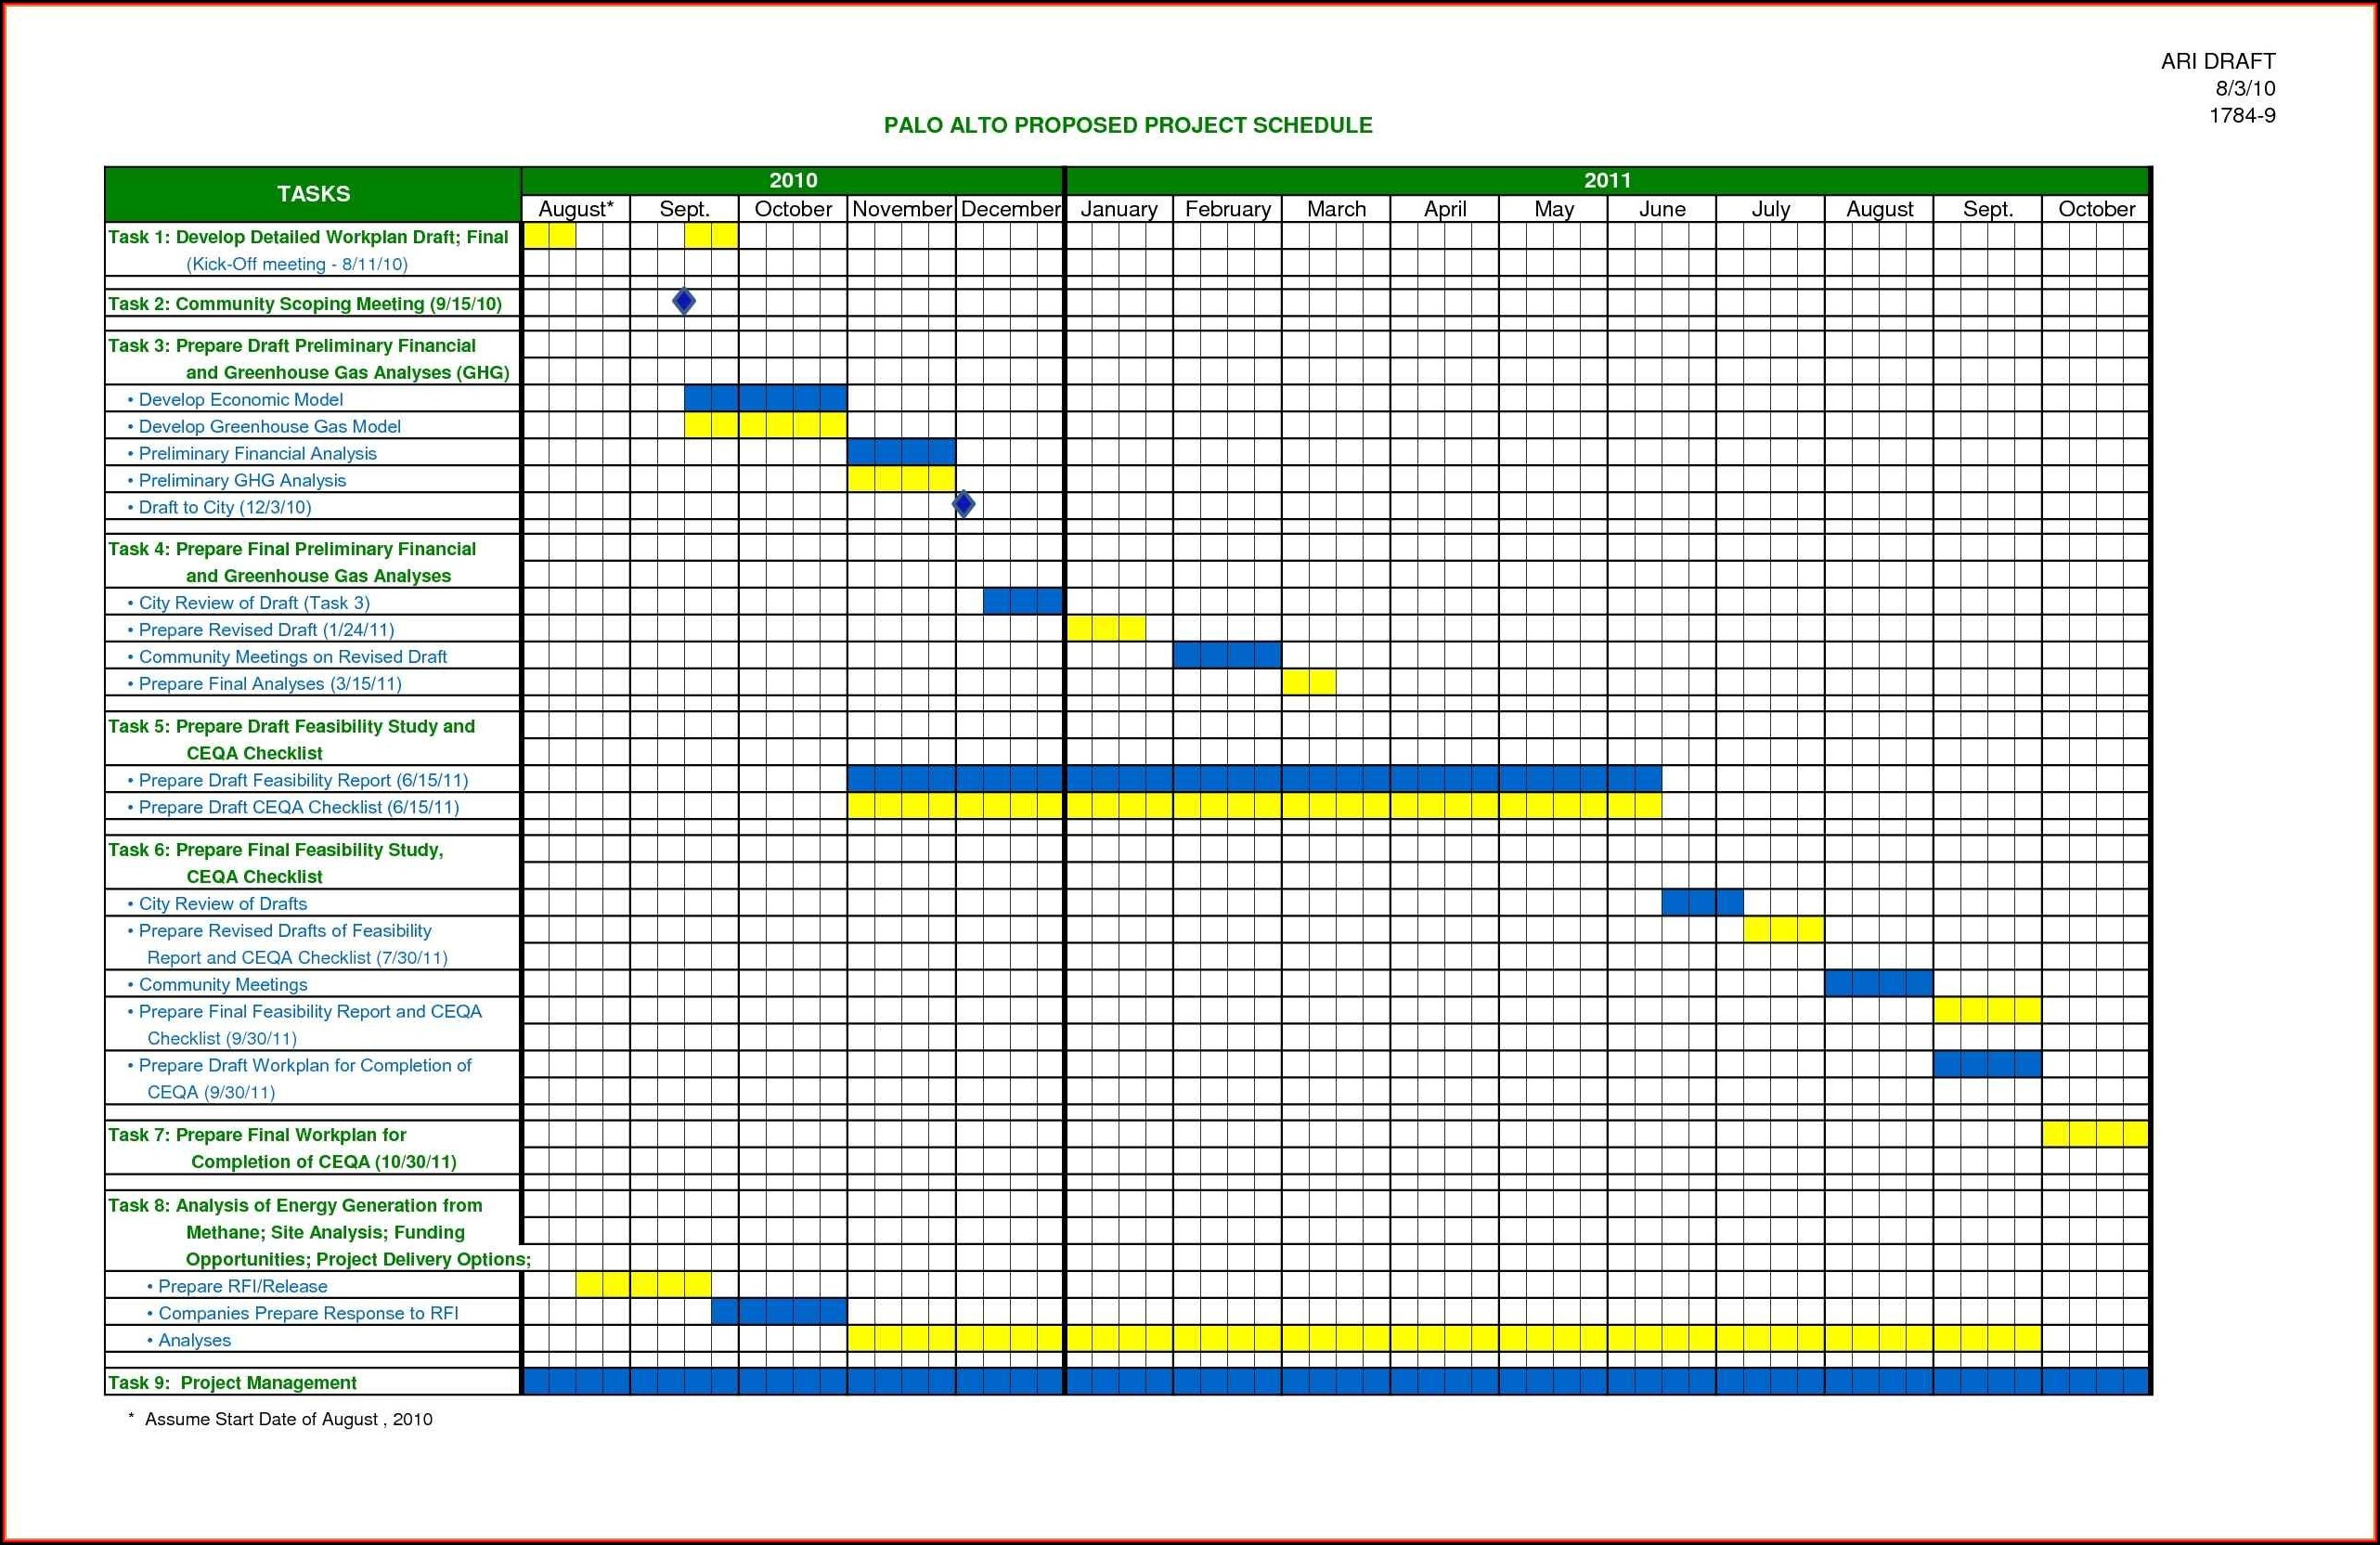 Monthly Employee Schedule Template Excel Download